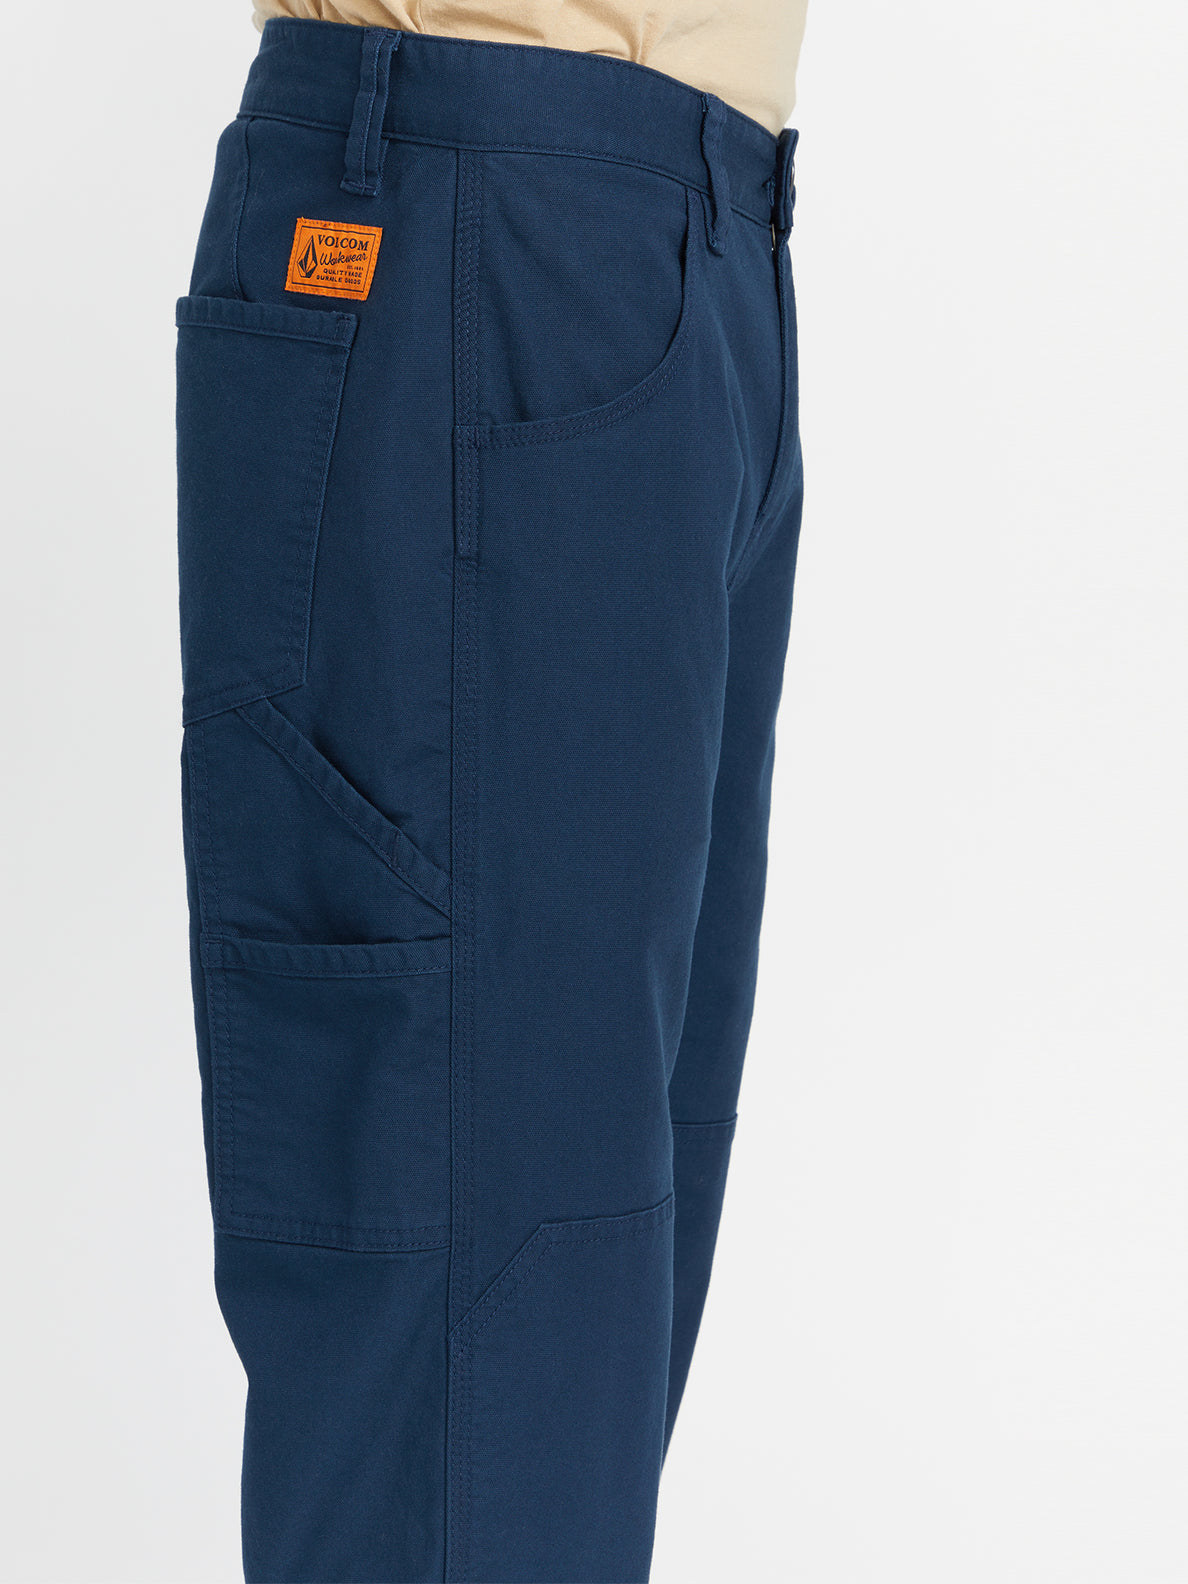 Volcom Workwear Caliper Relaxed Work Pants - Navy